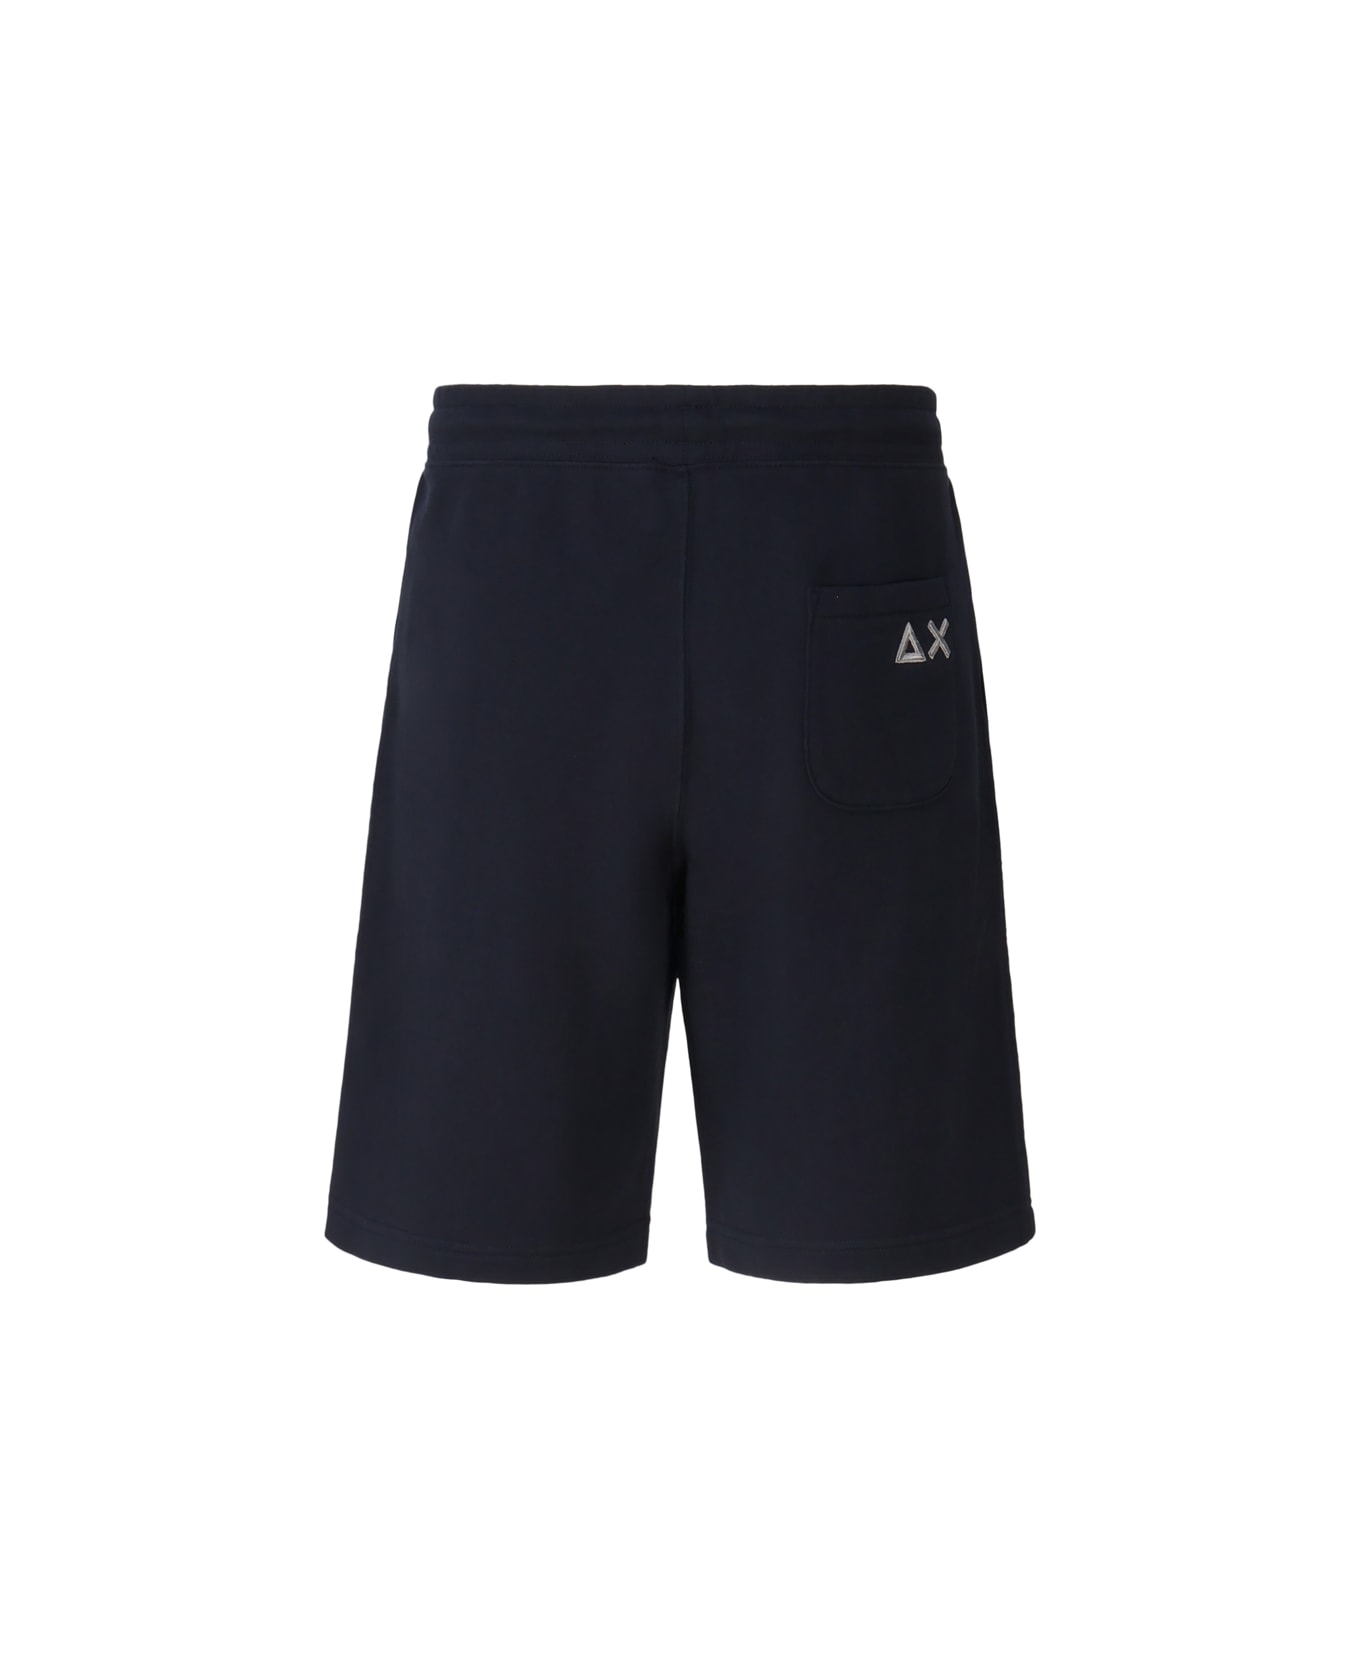 Sun 68 Cotton Blended Shorts - Navy blue